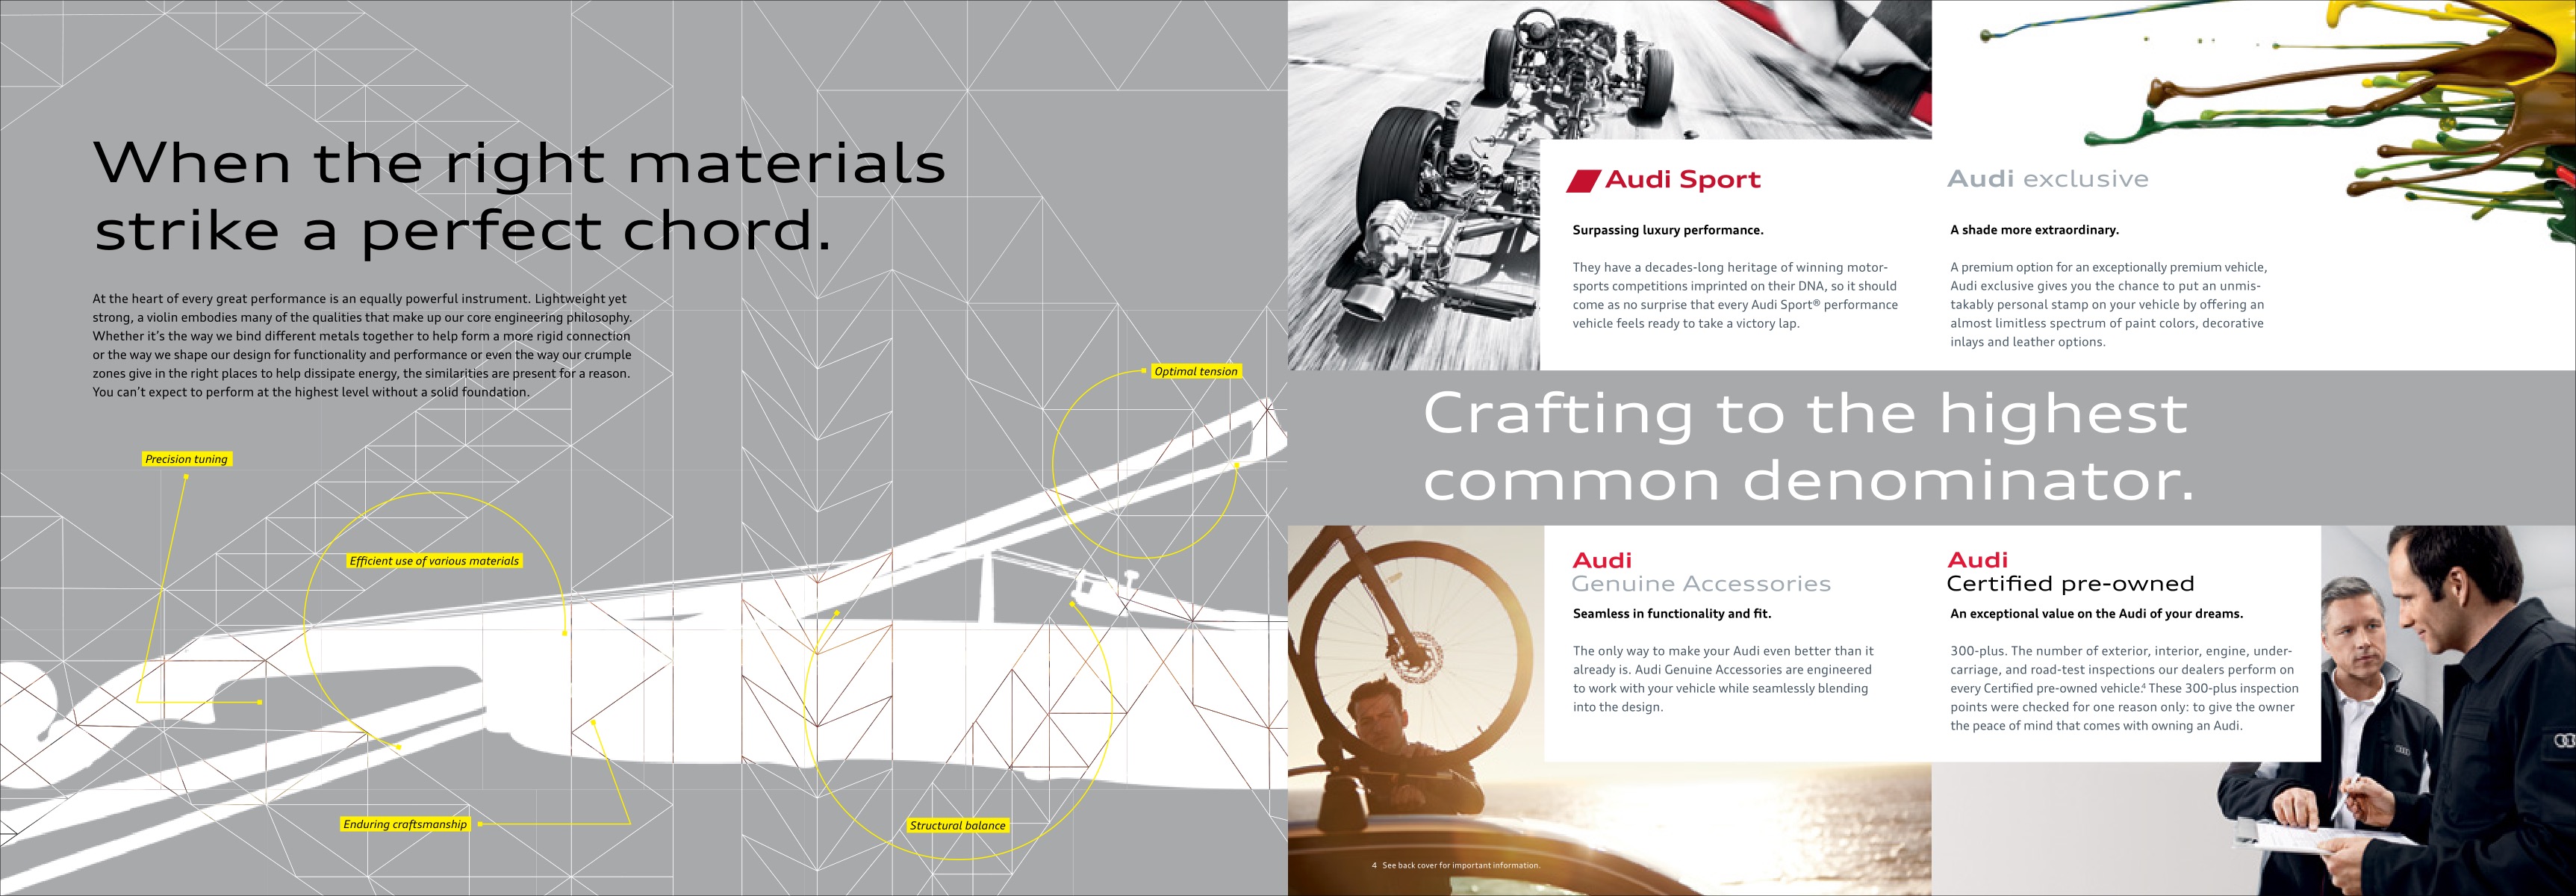 2016 Audi Brochure Page 8